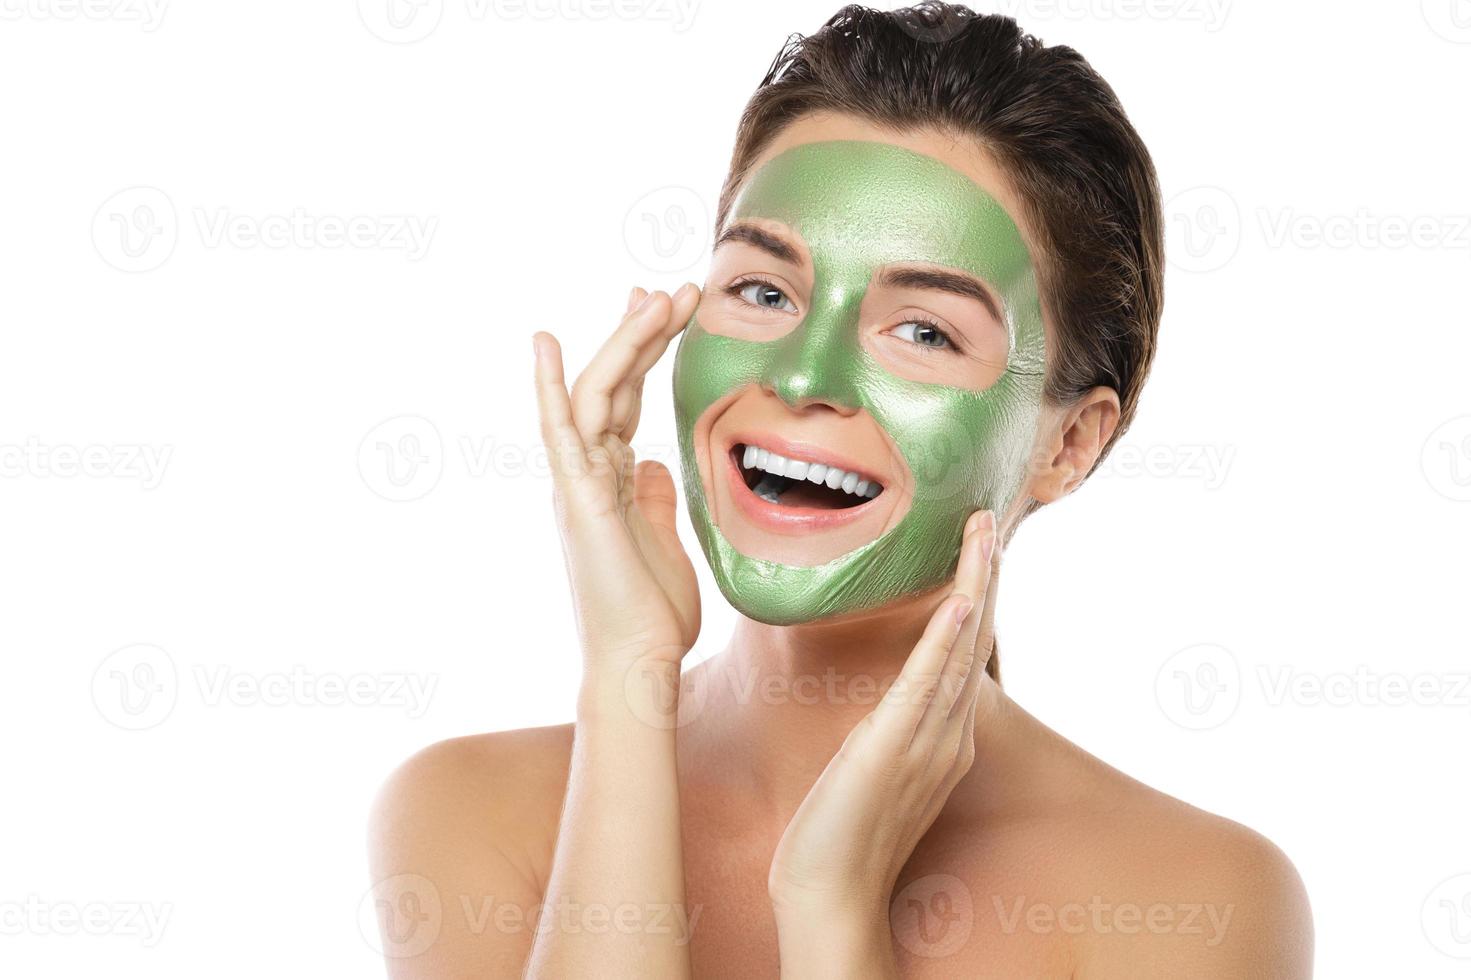 Frau mit grüner Abziehmaske im Gesicht foto